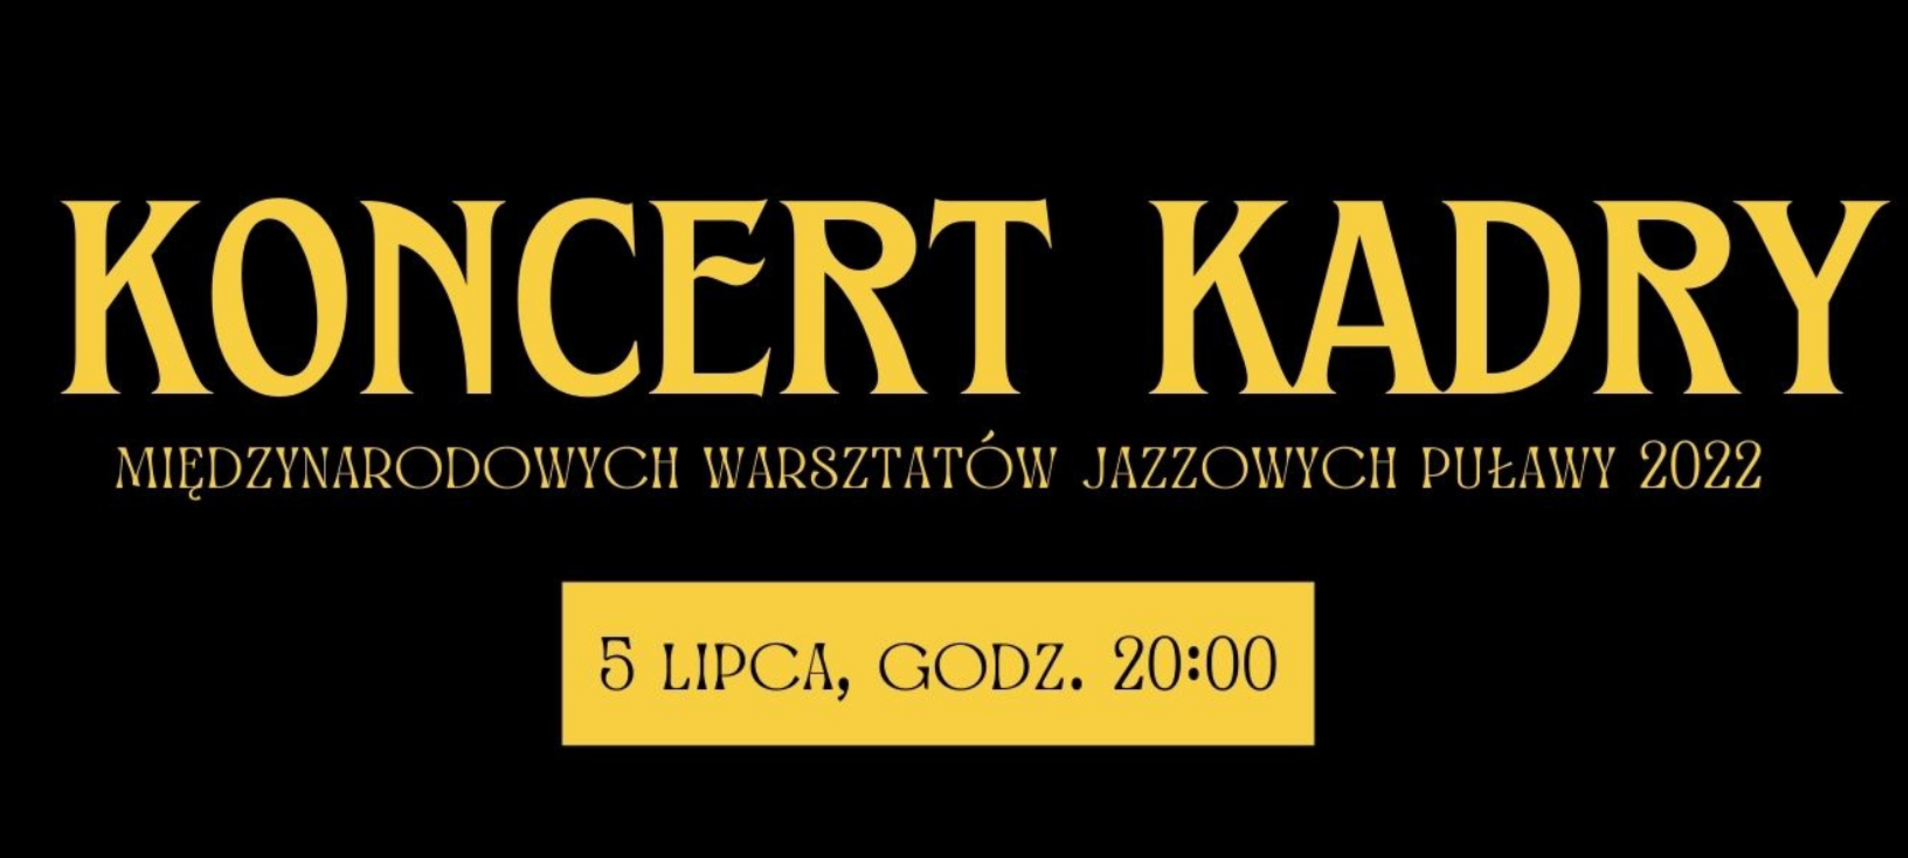 Koncert Kadry